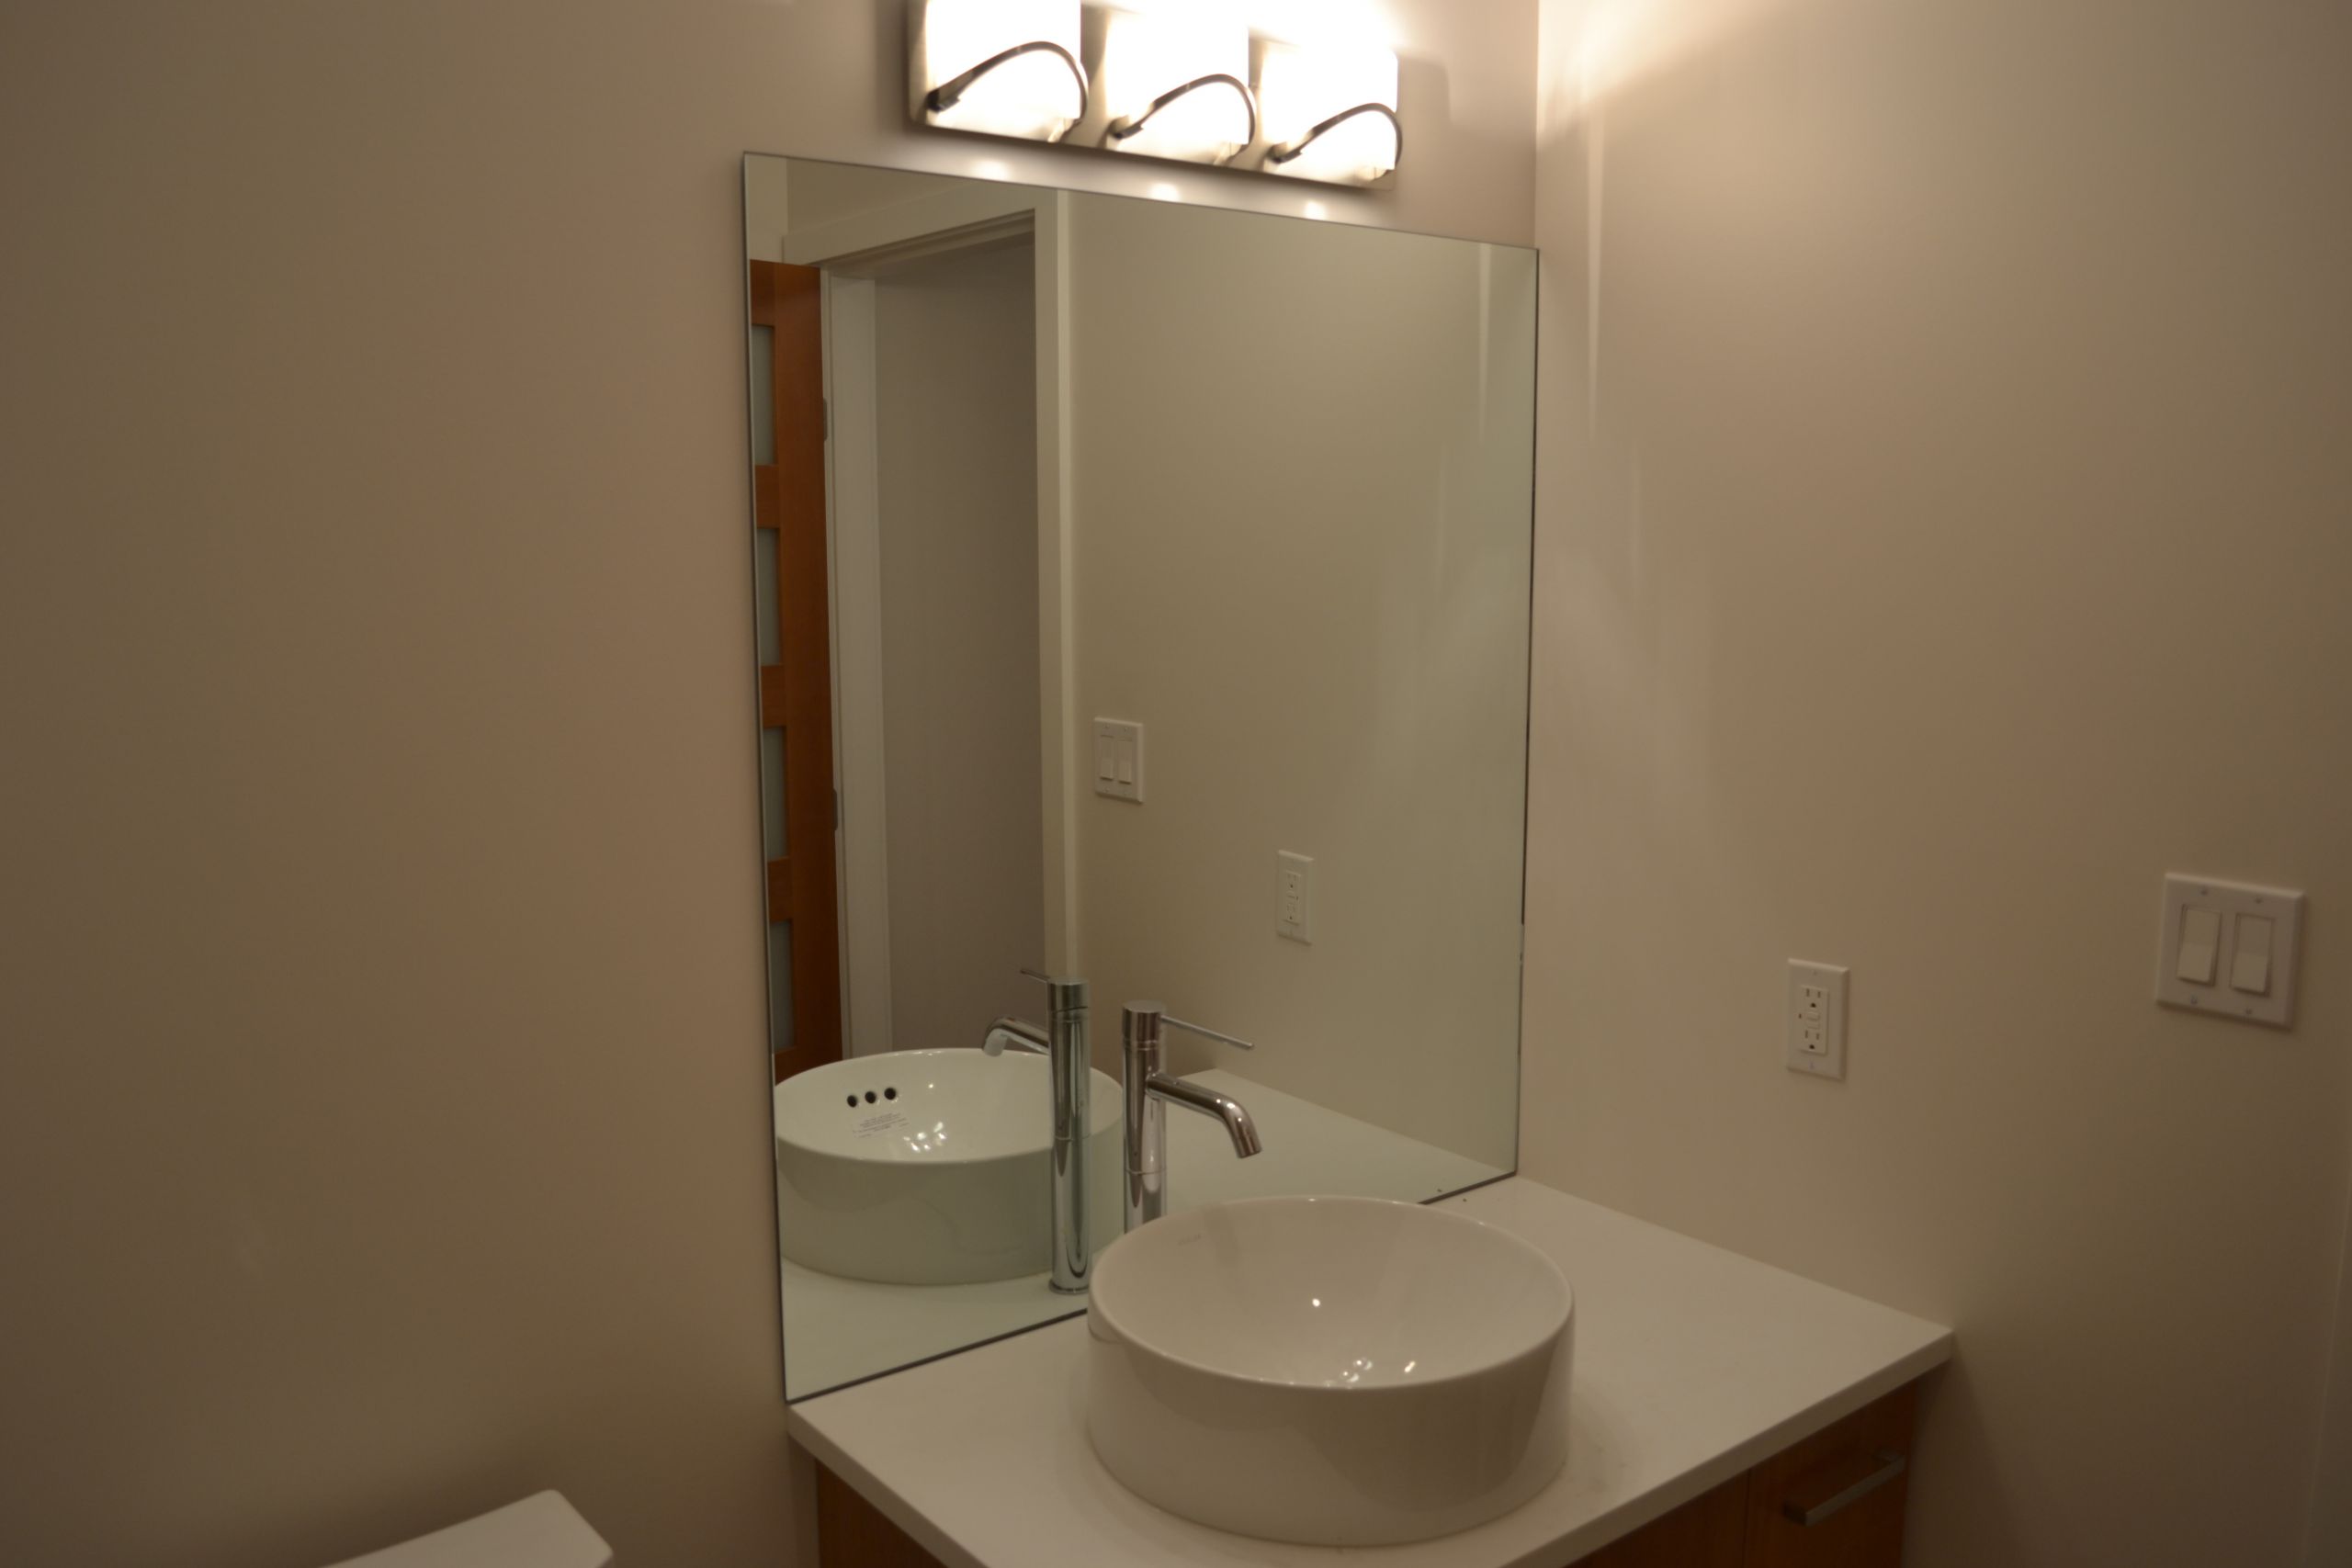 Bathroom Mirror Size
 custom sized bathroom mirror